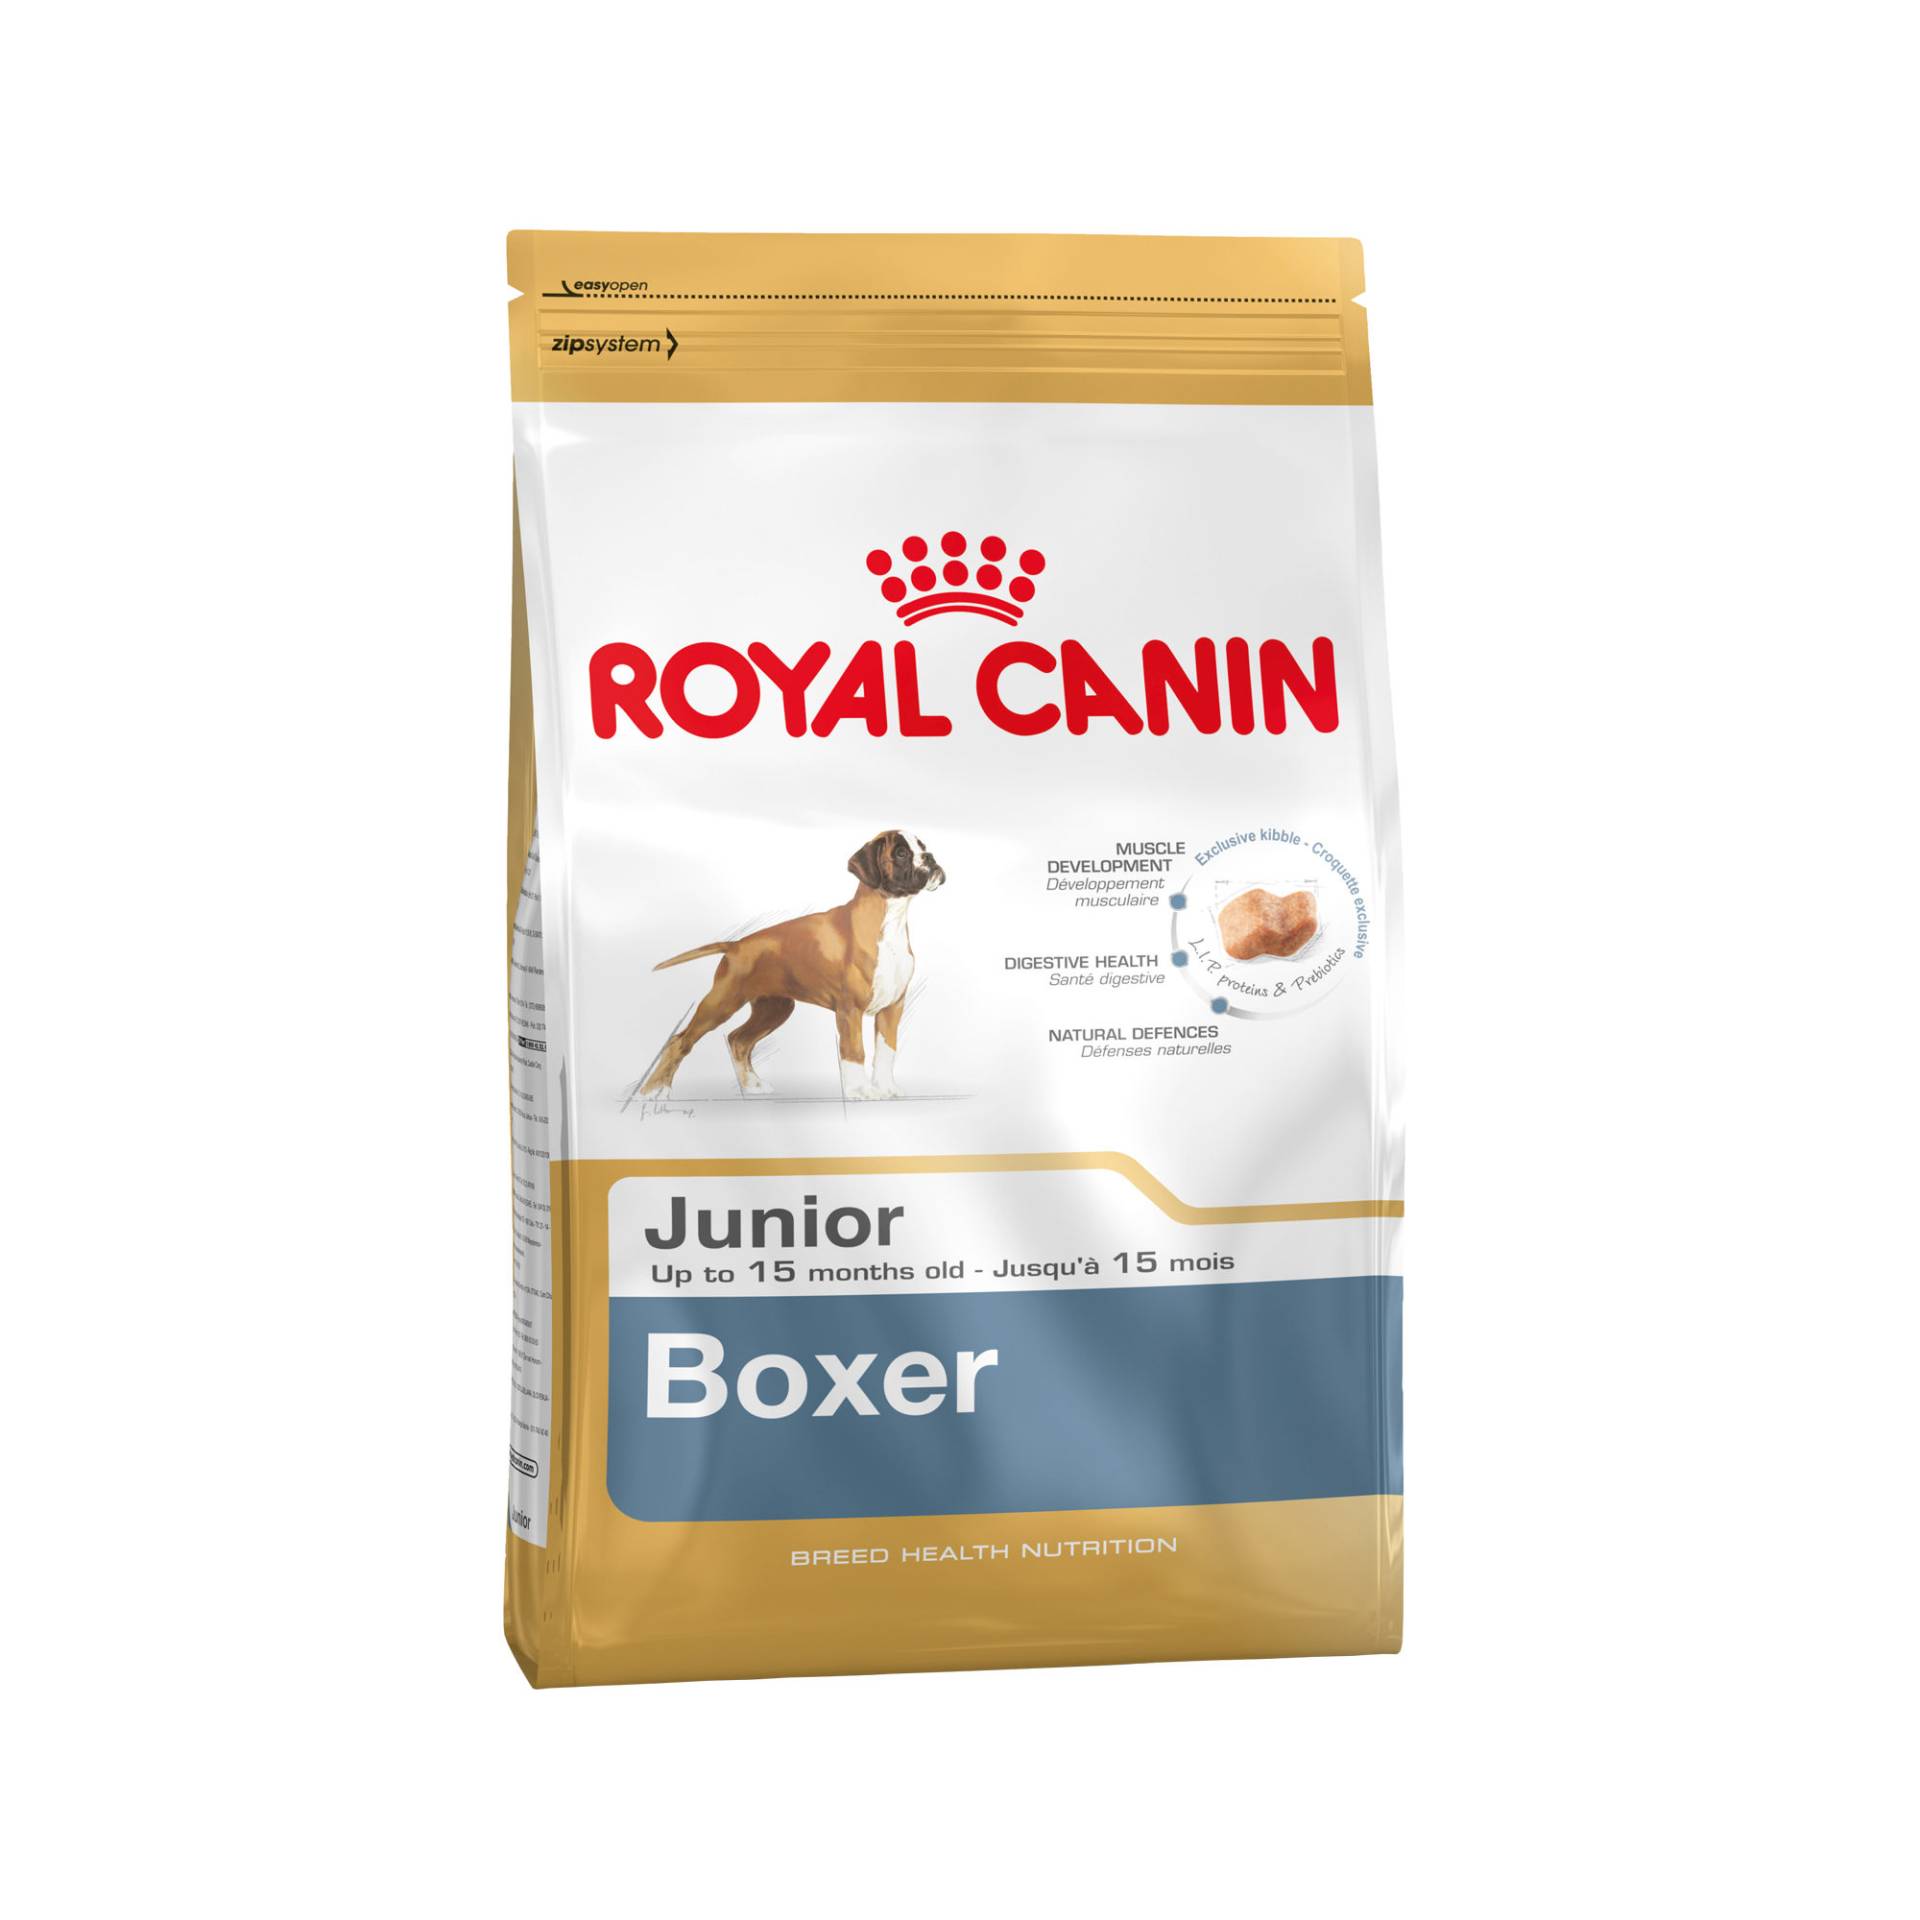 Royal Canin Boxer Puppy Hundefutter - 3 kg von Royal Canin